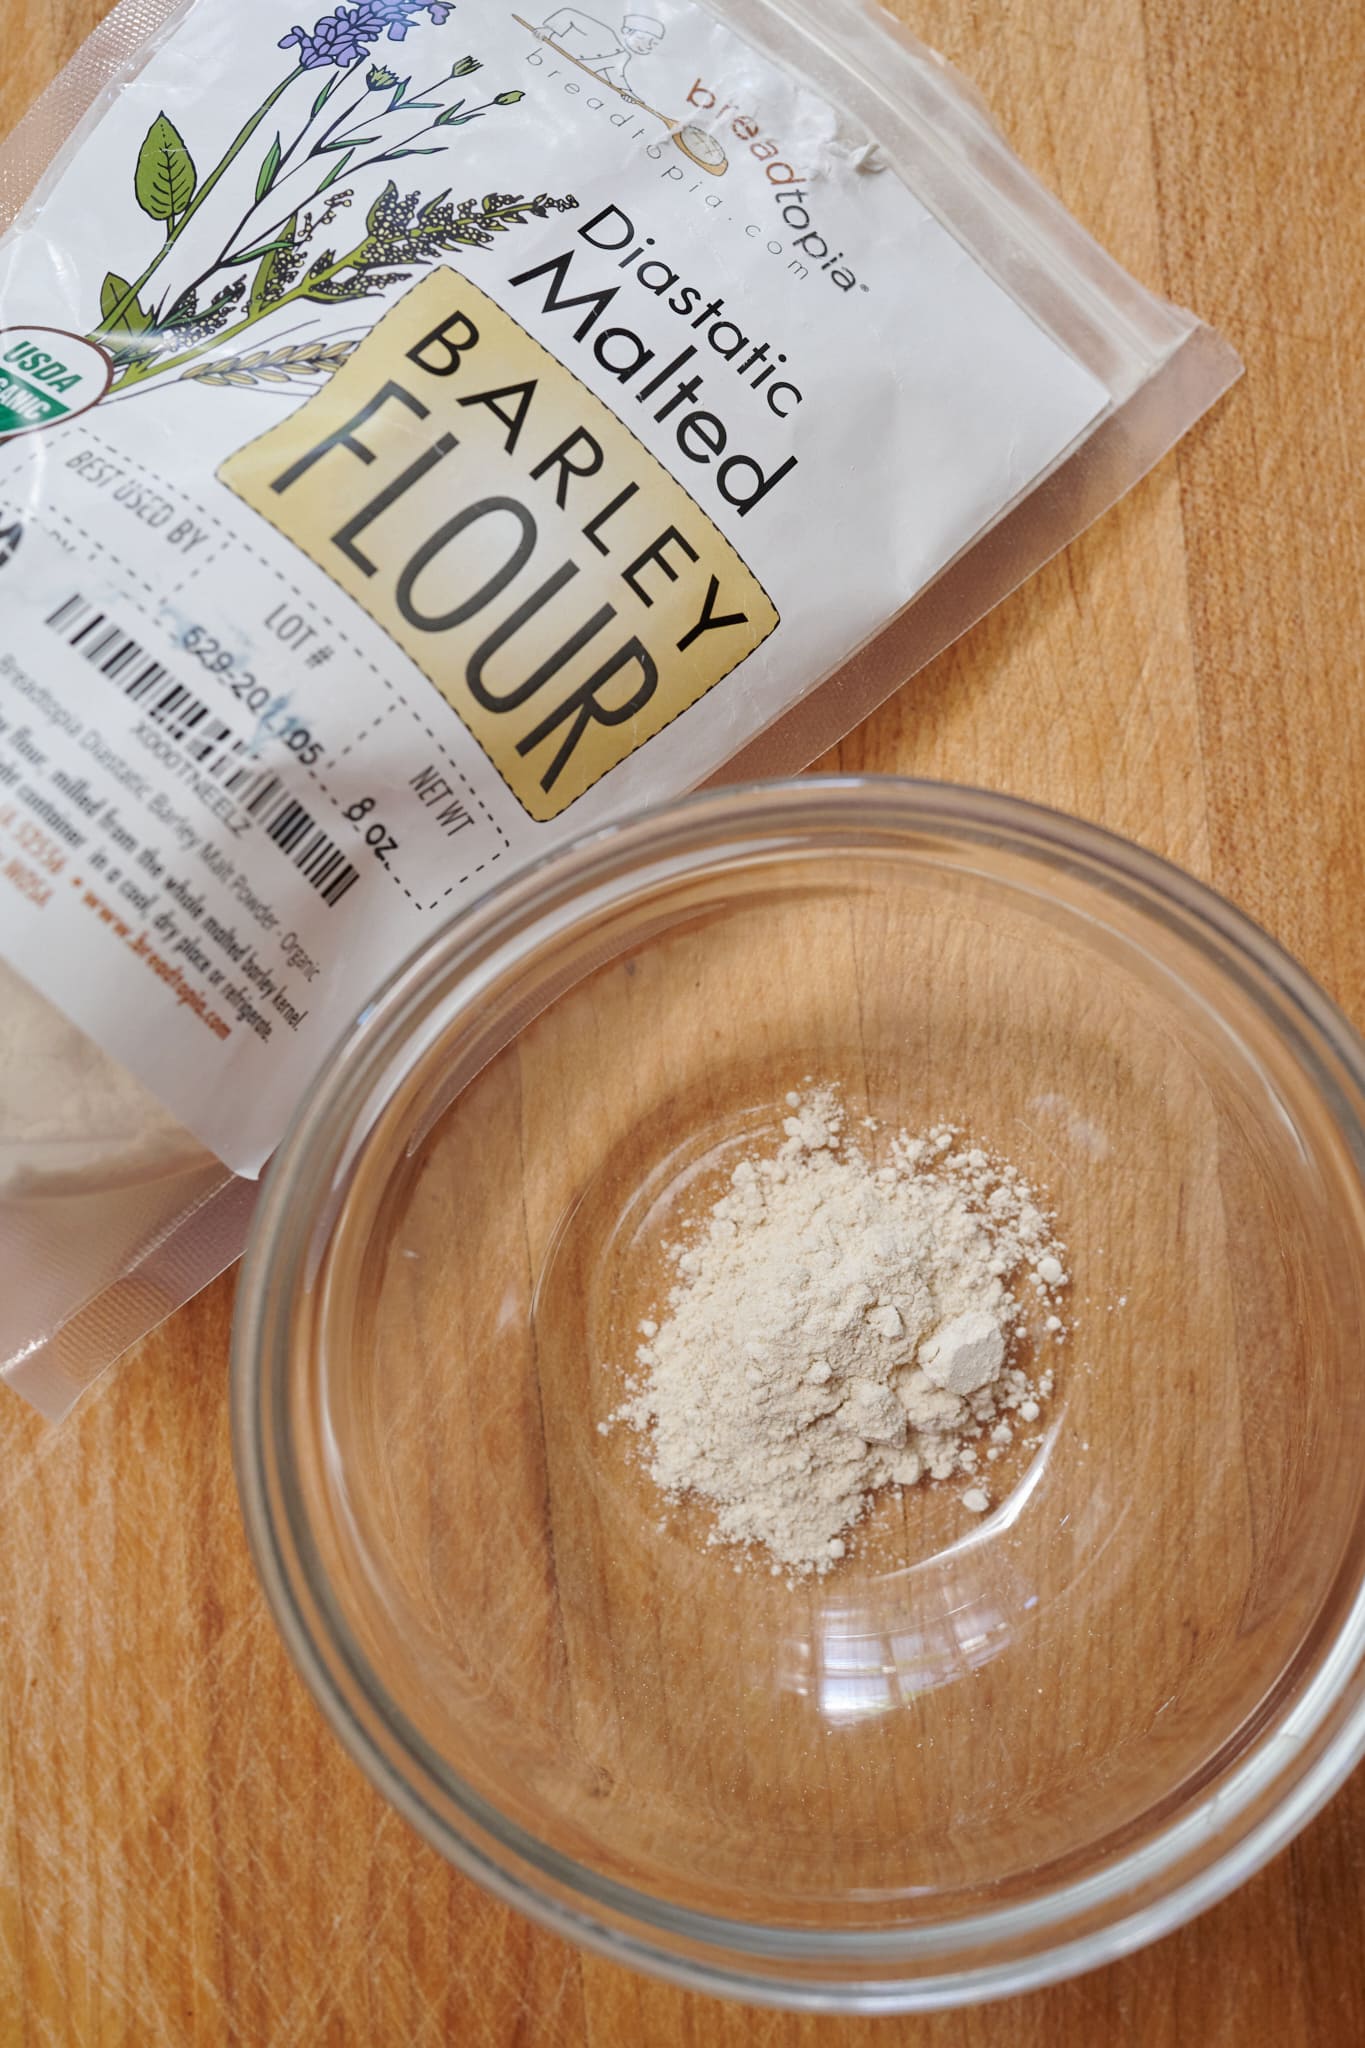 Diastatic malt powder used for sourdough bread baking.